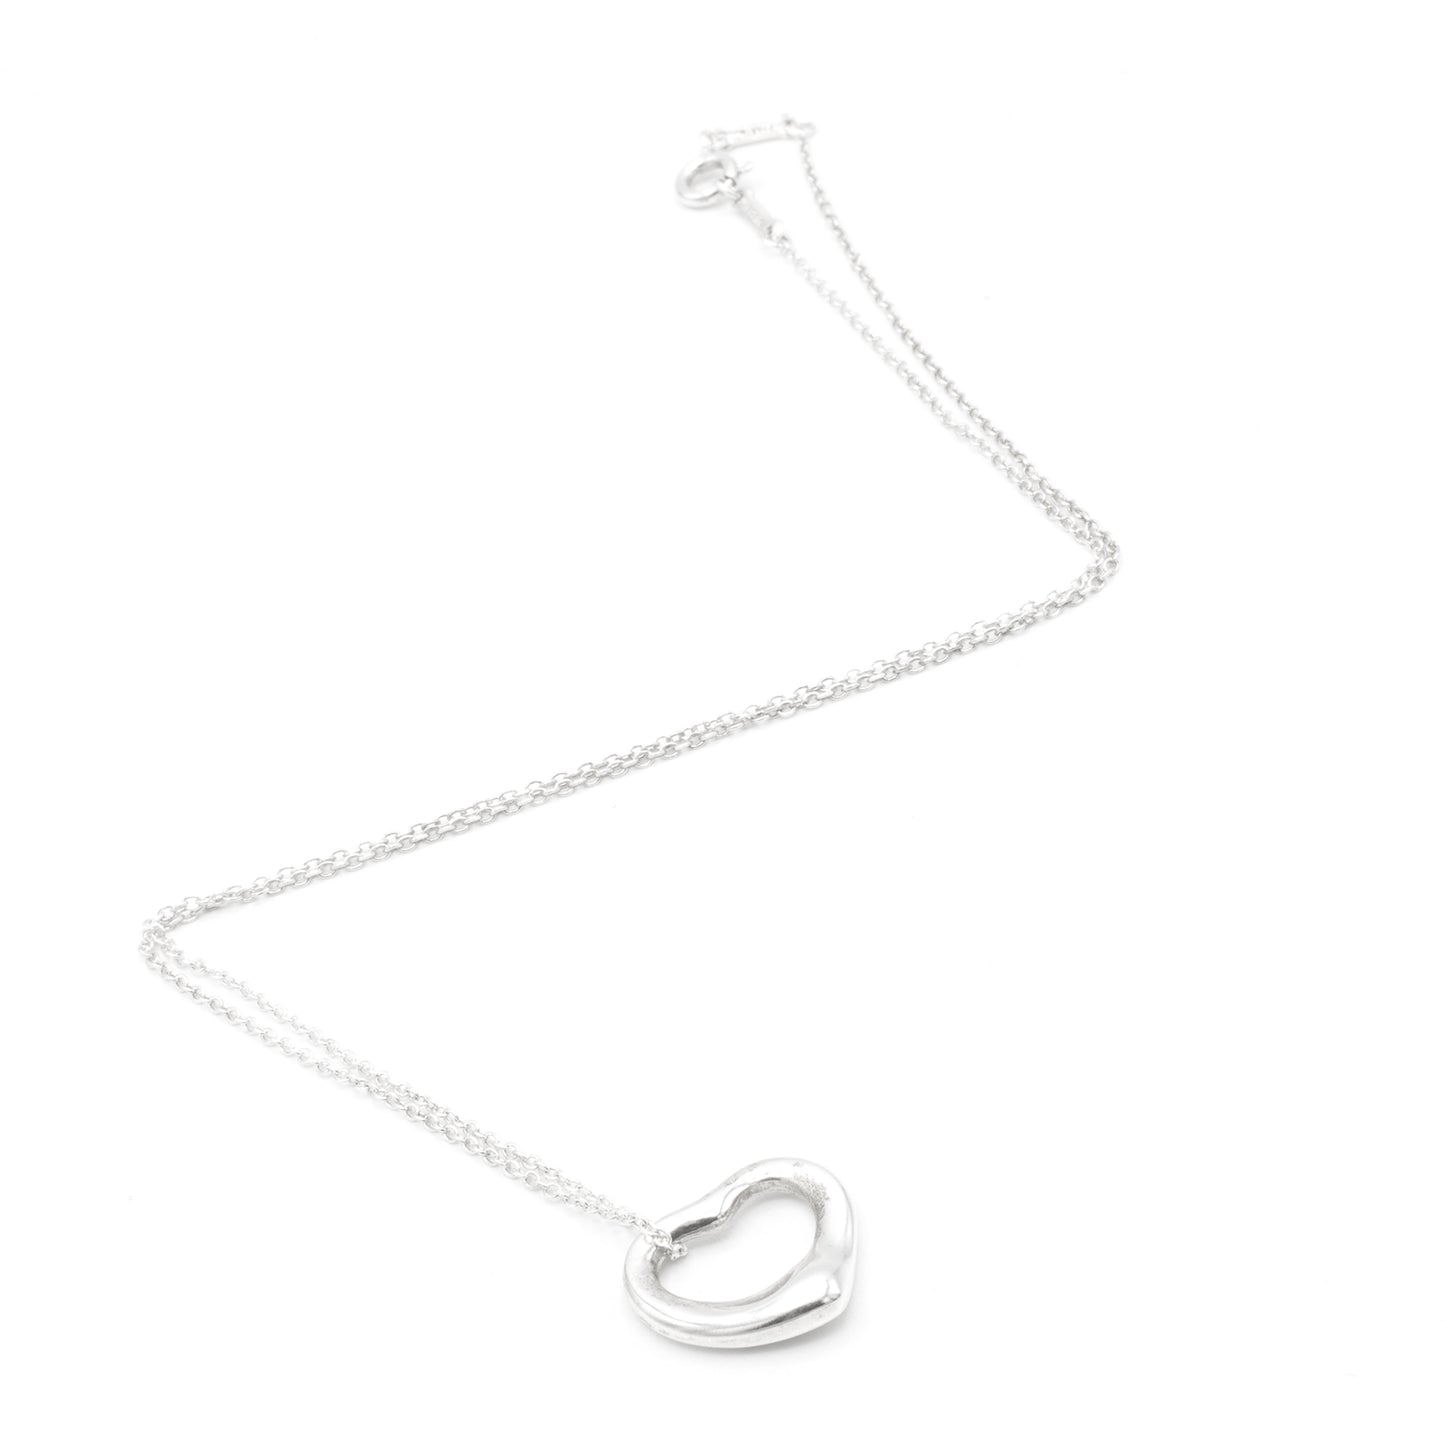 Tiffany Open Heart 15mm necklace